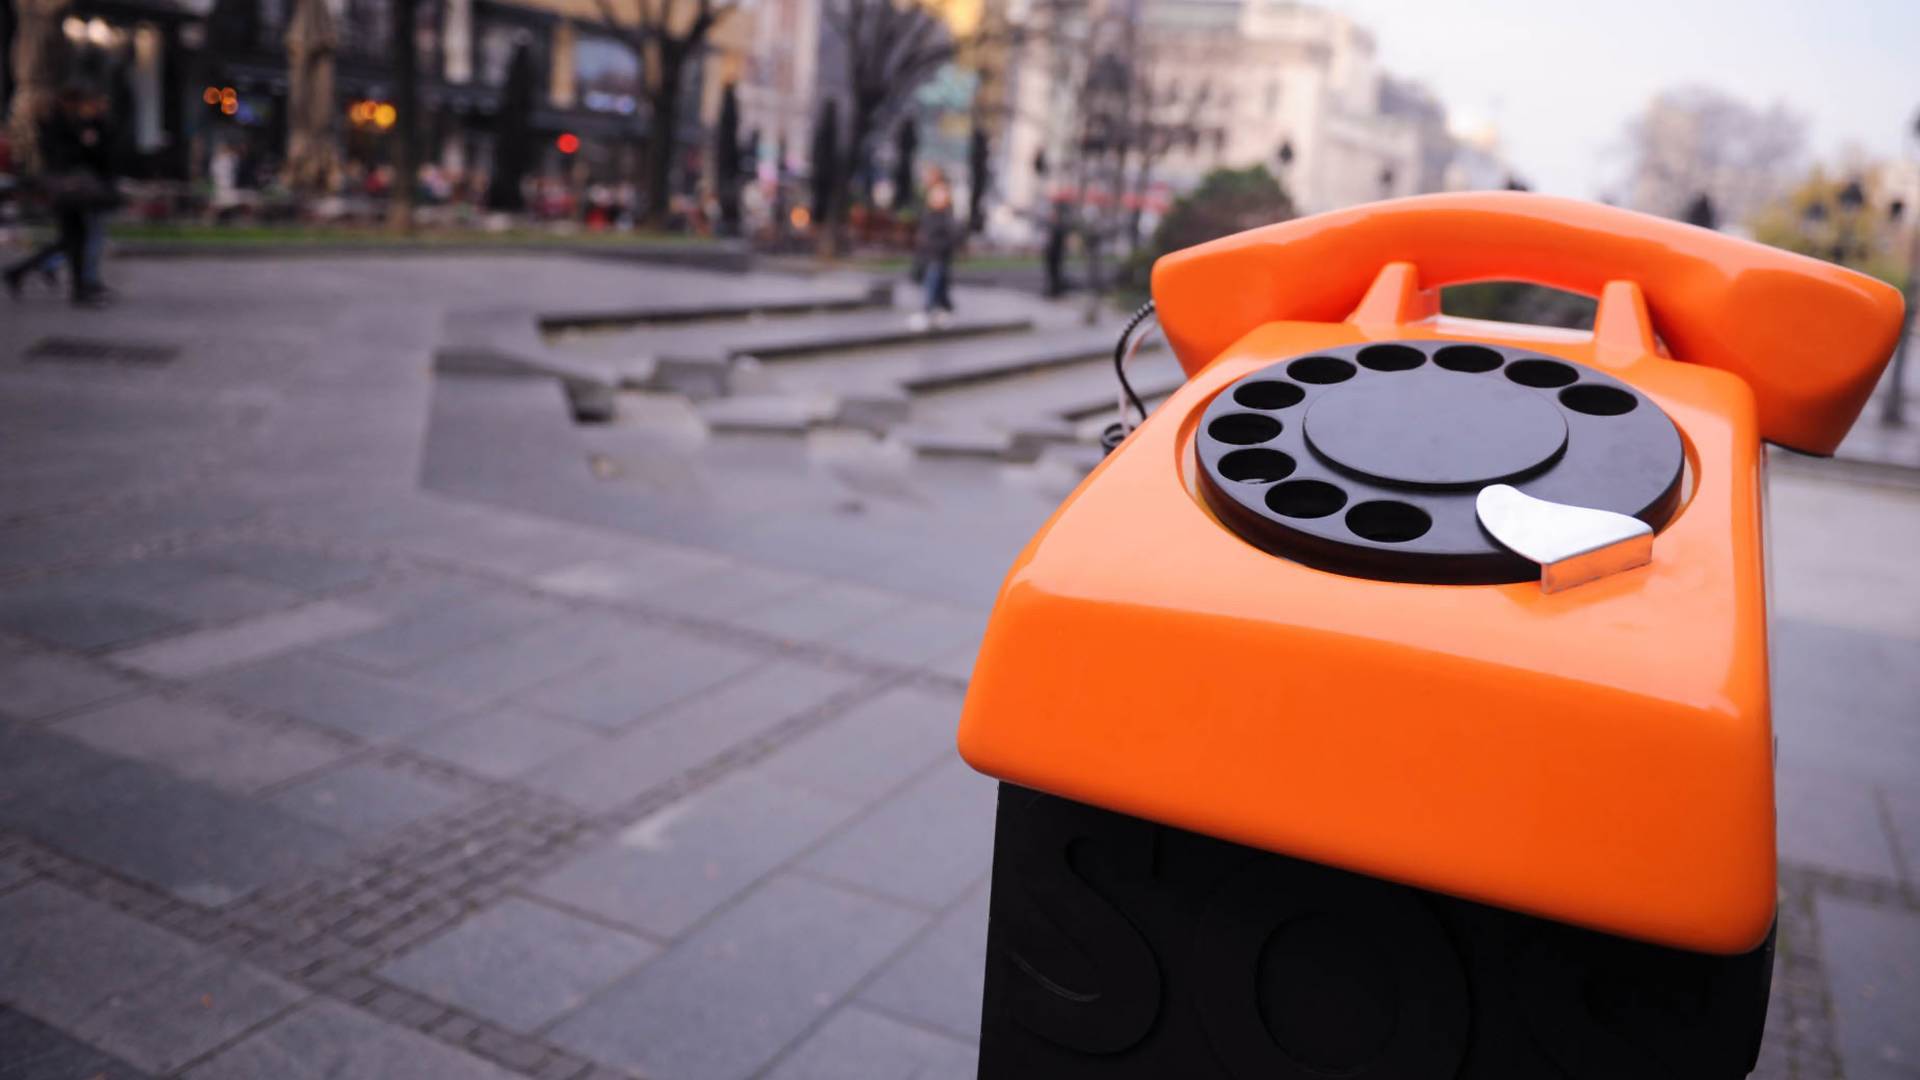 Kome smeta narandžasti SOS telefon na Trgu republike?